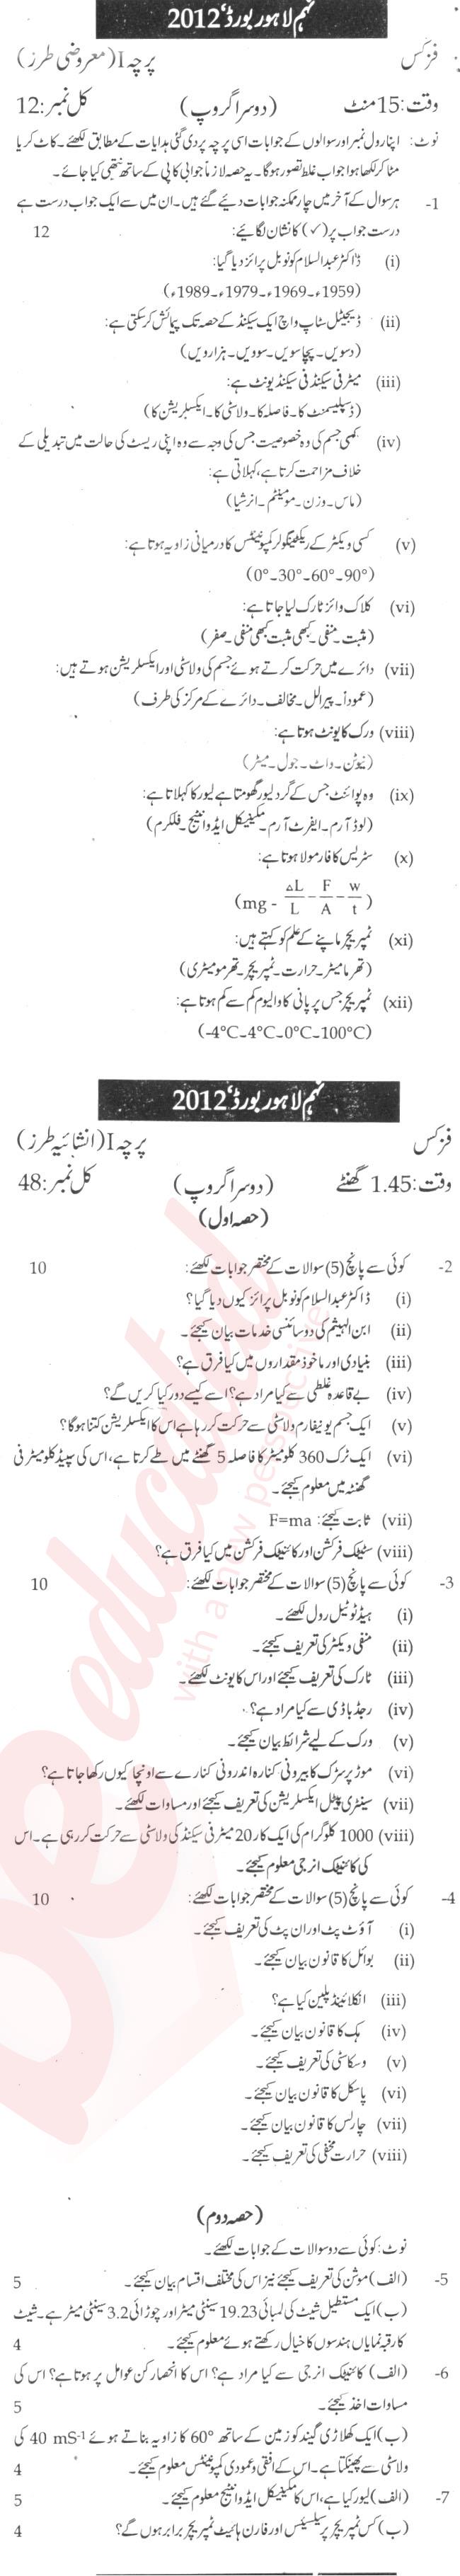 Physics 9th Urdu Medium Past Paper Group 2 BISE Gujranwala 2012